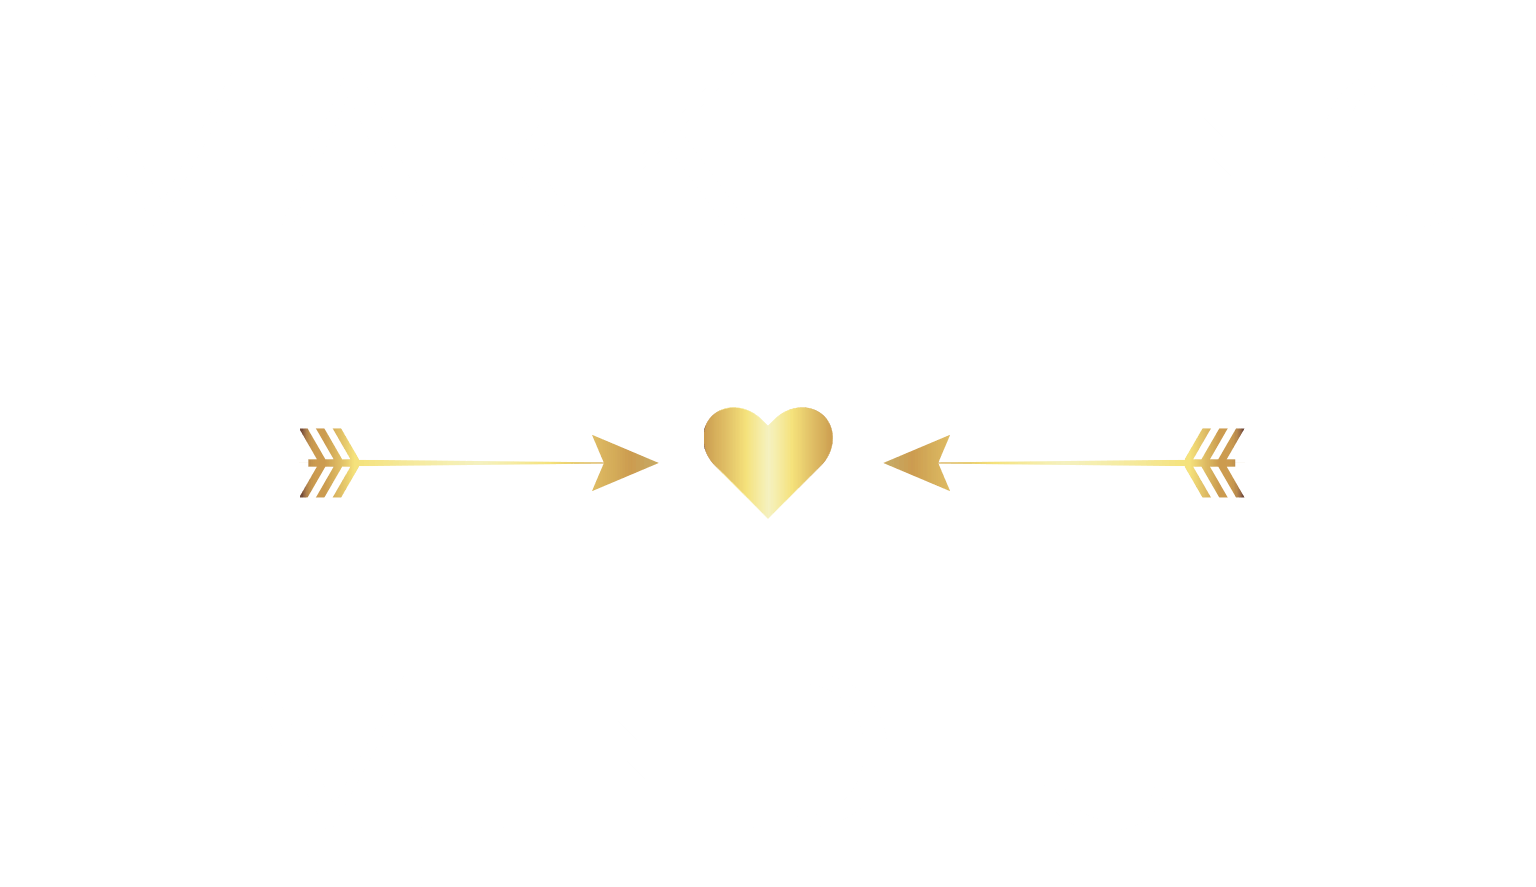 Marketing Mindful